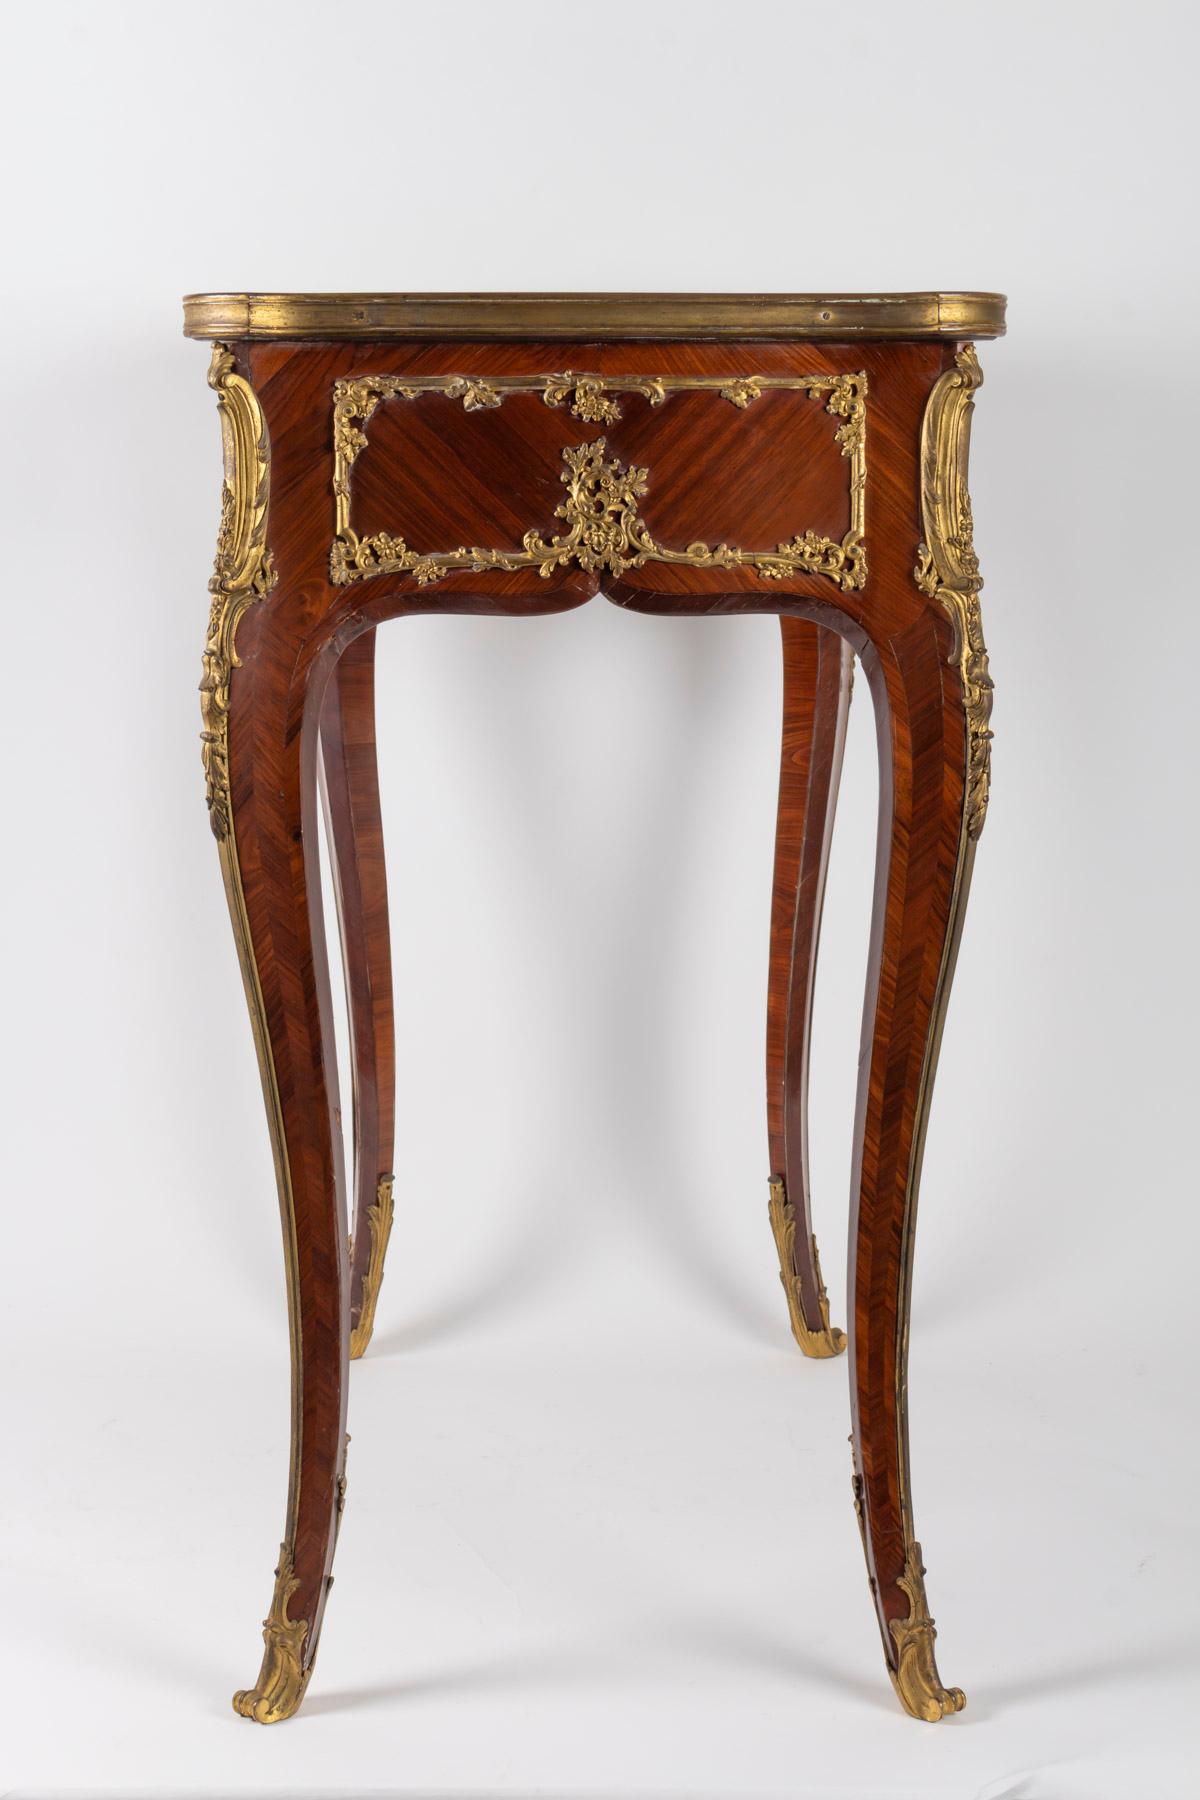 Napoleon III era desk, Louis XV style, 1880, Signed Lucien Roulin, original marquetry and gilded bronze.
Measures: H 75cm, W 72cm, P 43cm.